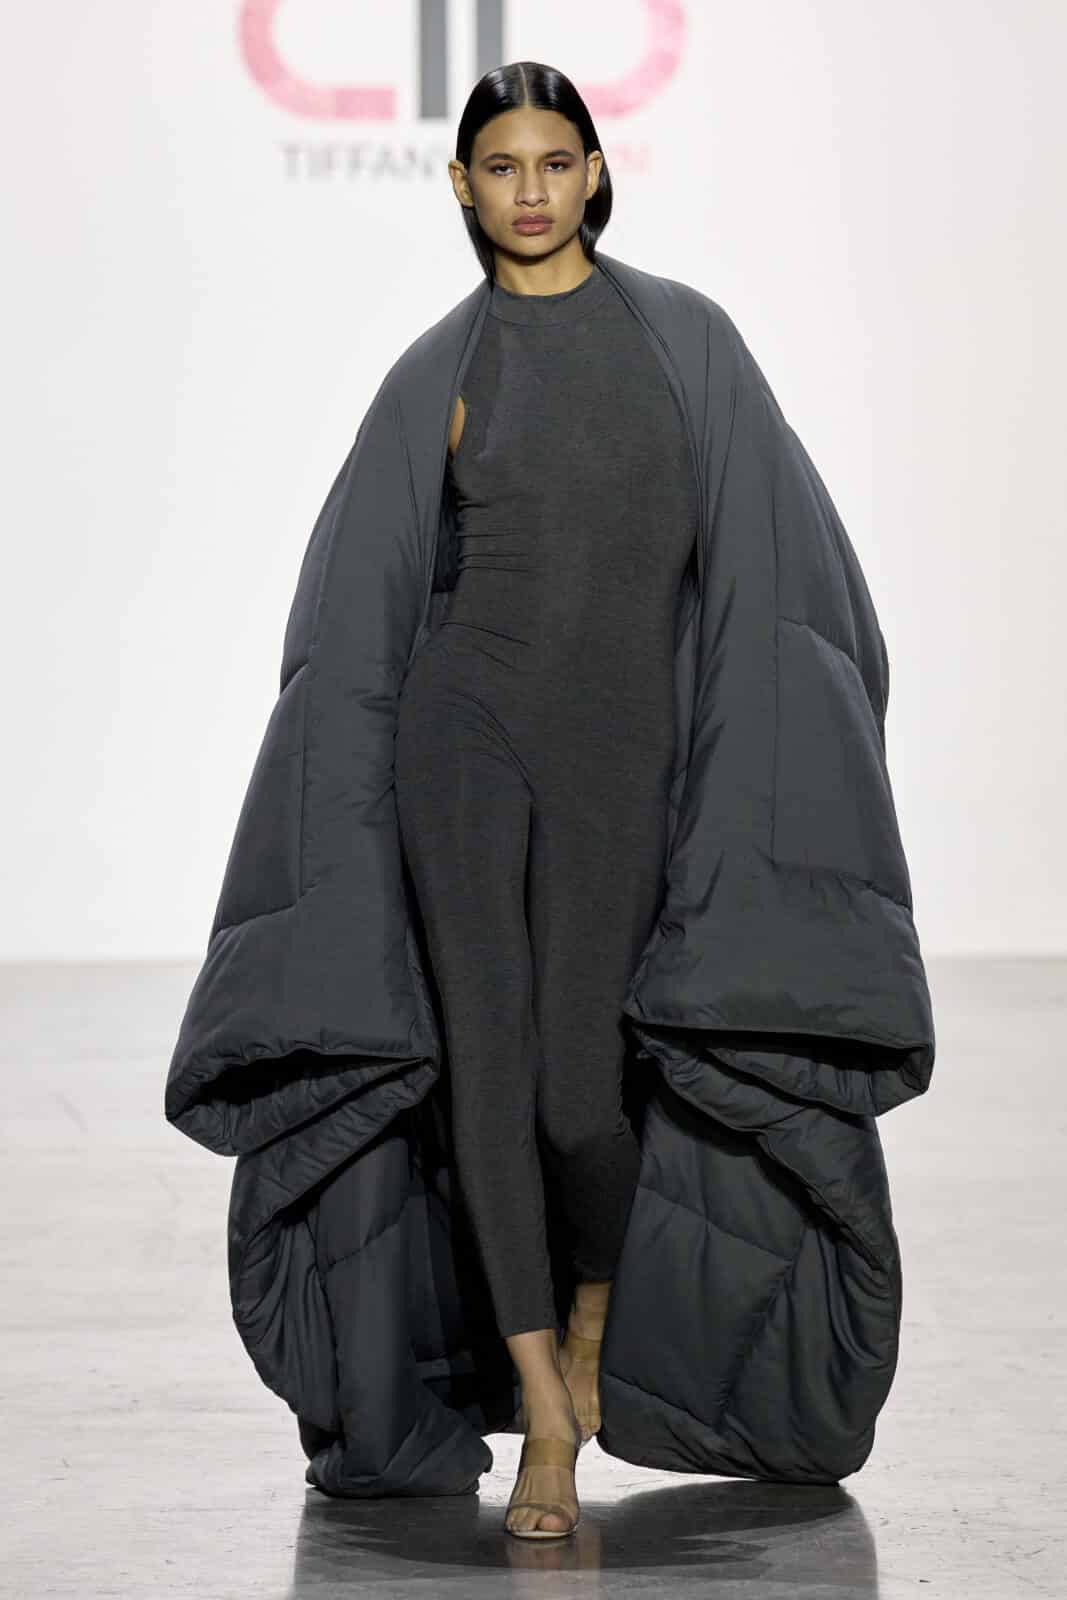 Tiffany Brown is throwing shade at New York Fashion Week 2023